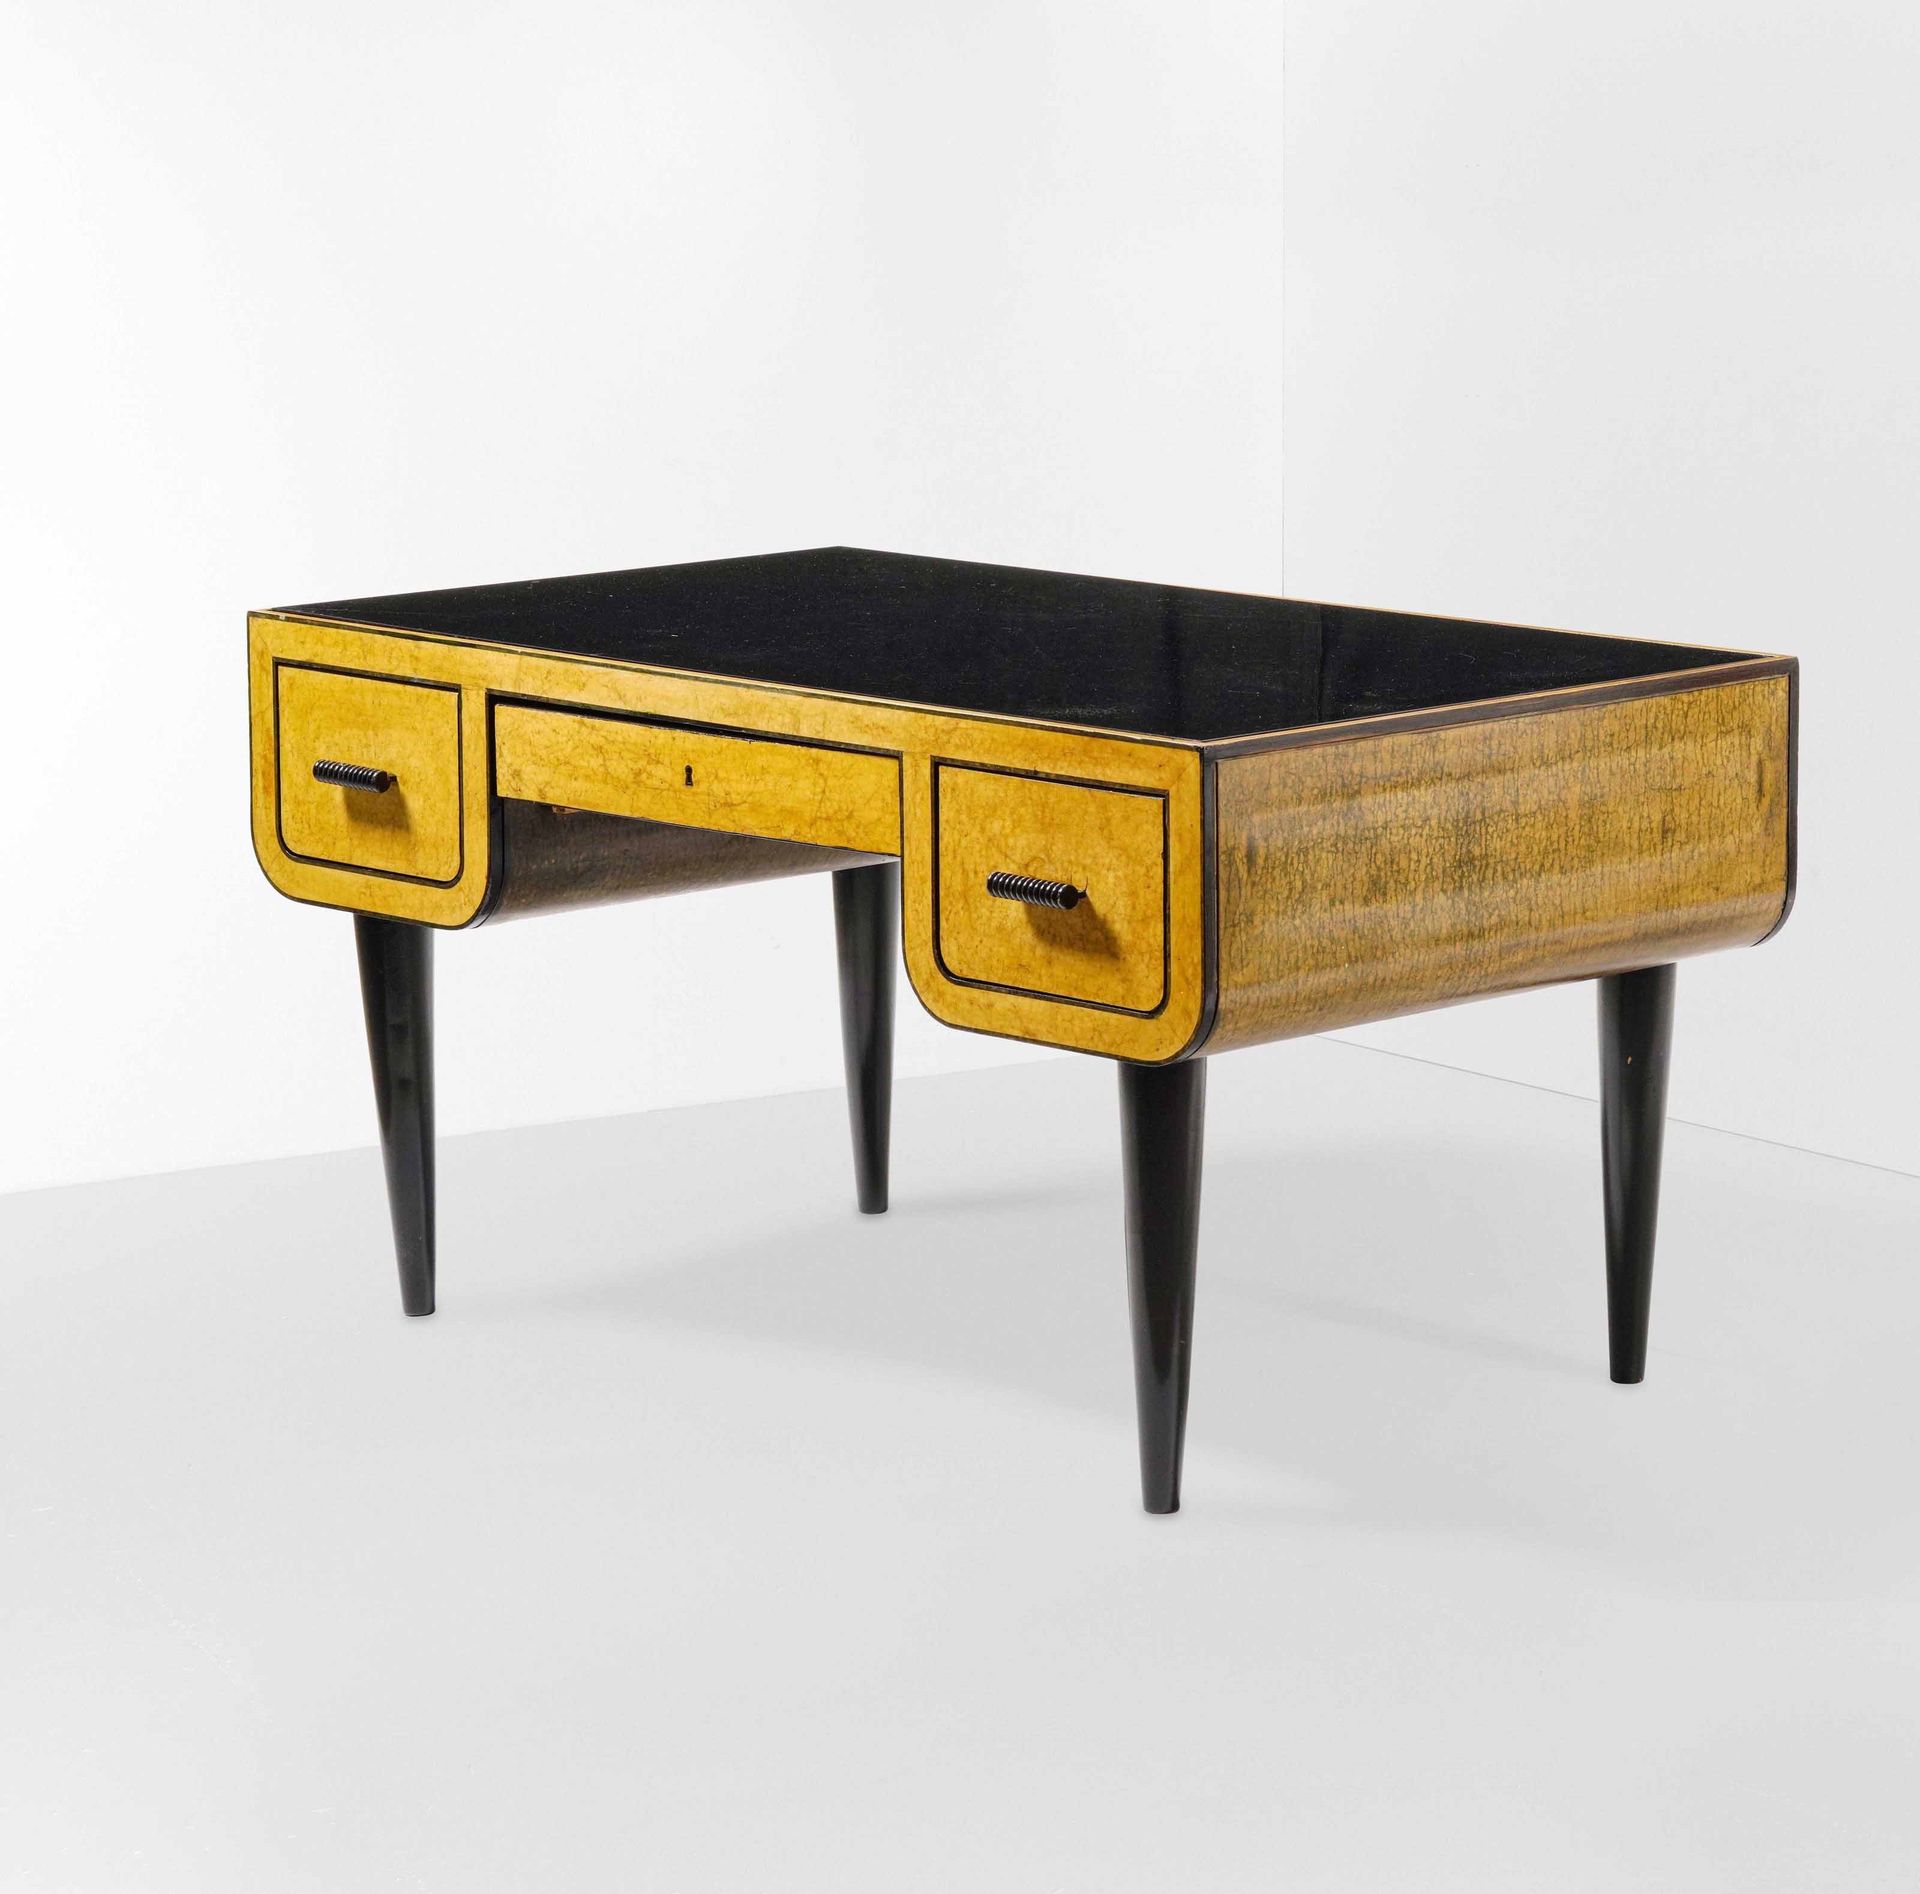 Giuseppe Pagano Pogatschnig (attribuzione) 书桌，黄杨木框架，黑檀木支架和把手，黑色乳白玻璃桌面，意大利制造，约193&hellip;